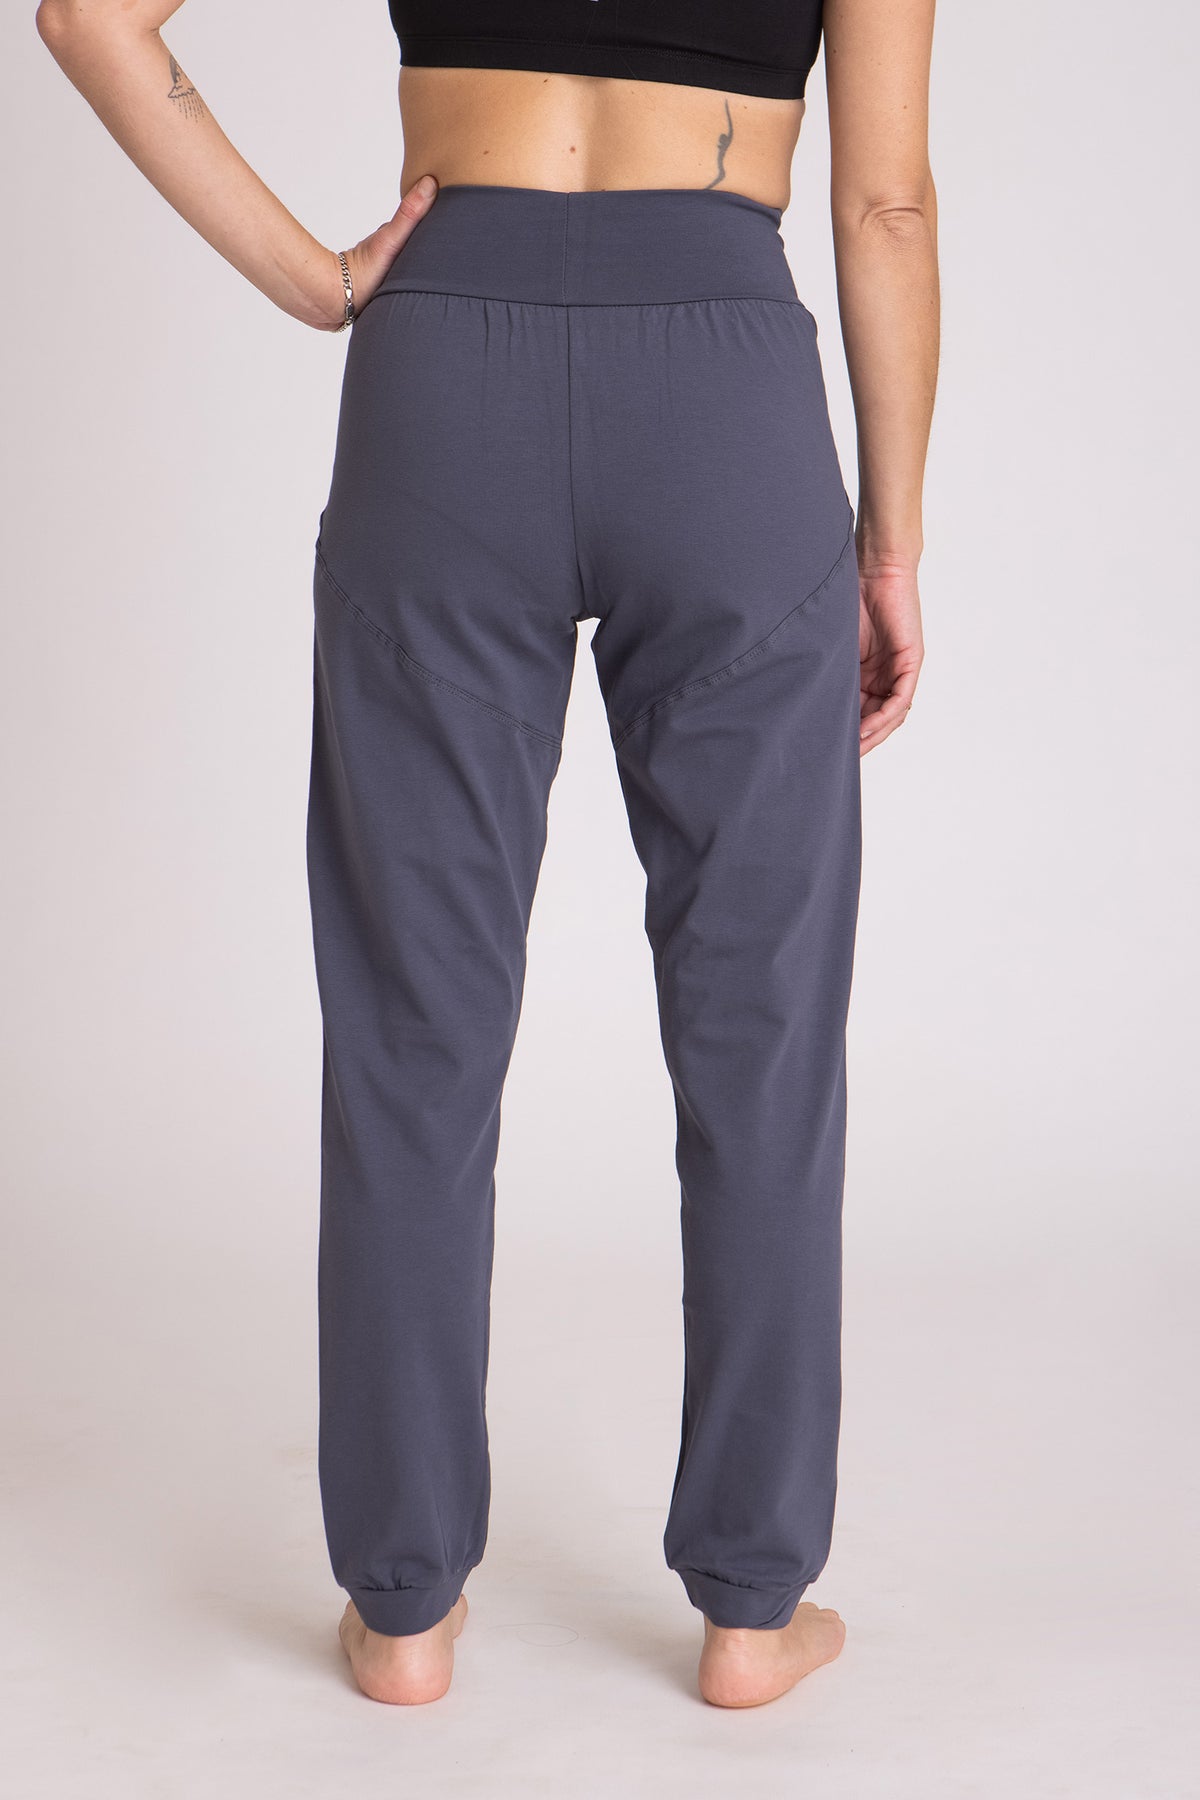 Organic Cotton Unisex Slouchy Pants